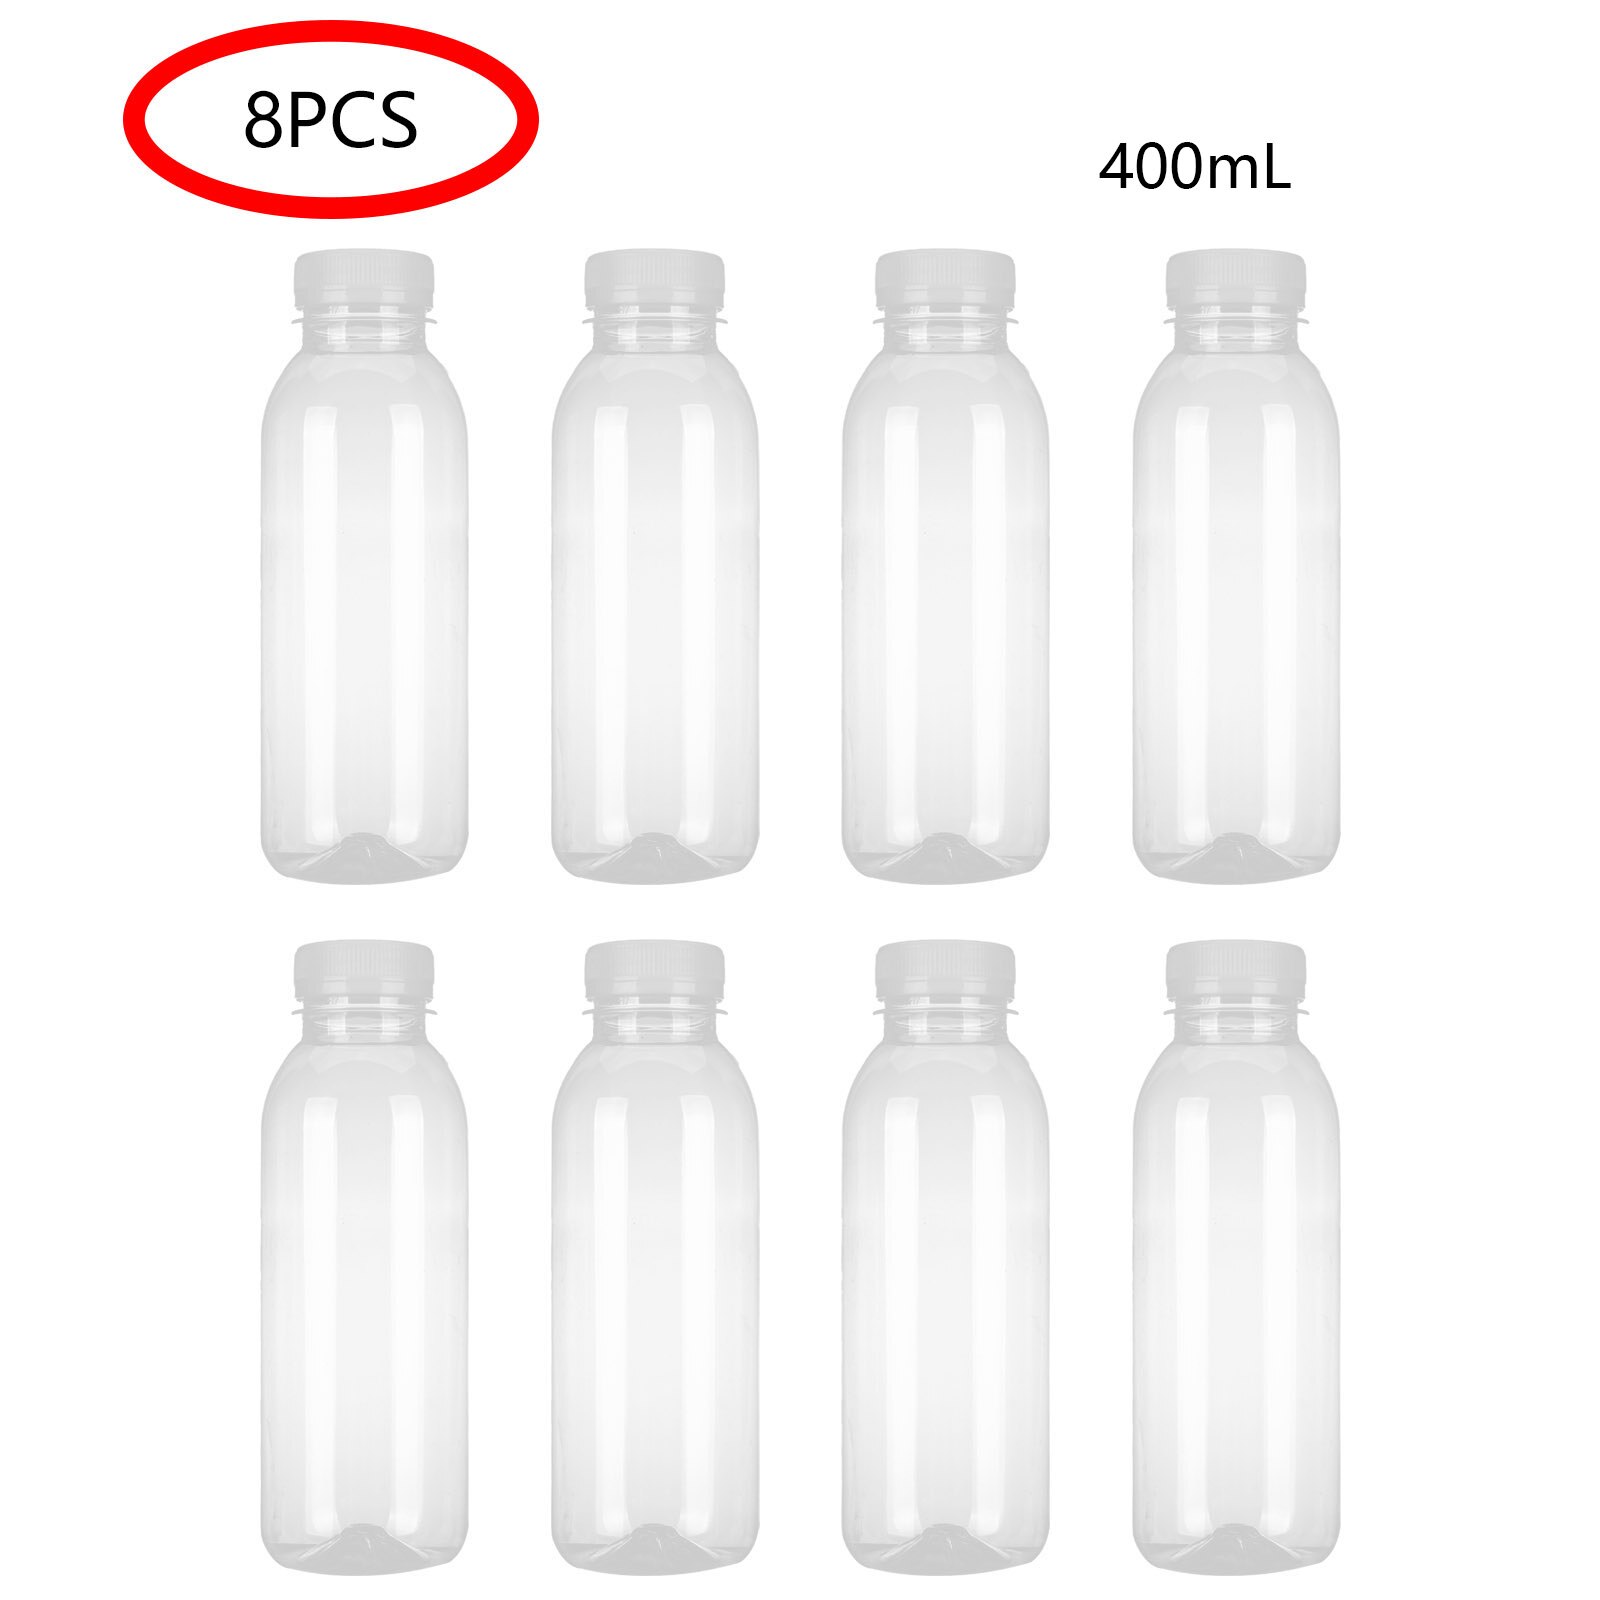 300/350/400ml Transparent PET Beverage Bottles Plastic Empty Soft Drink Storage Containers Bottle Jars with Lids for Juice Milk: 8 Pcs 400ml